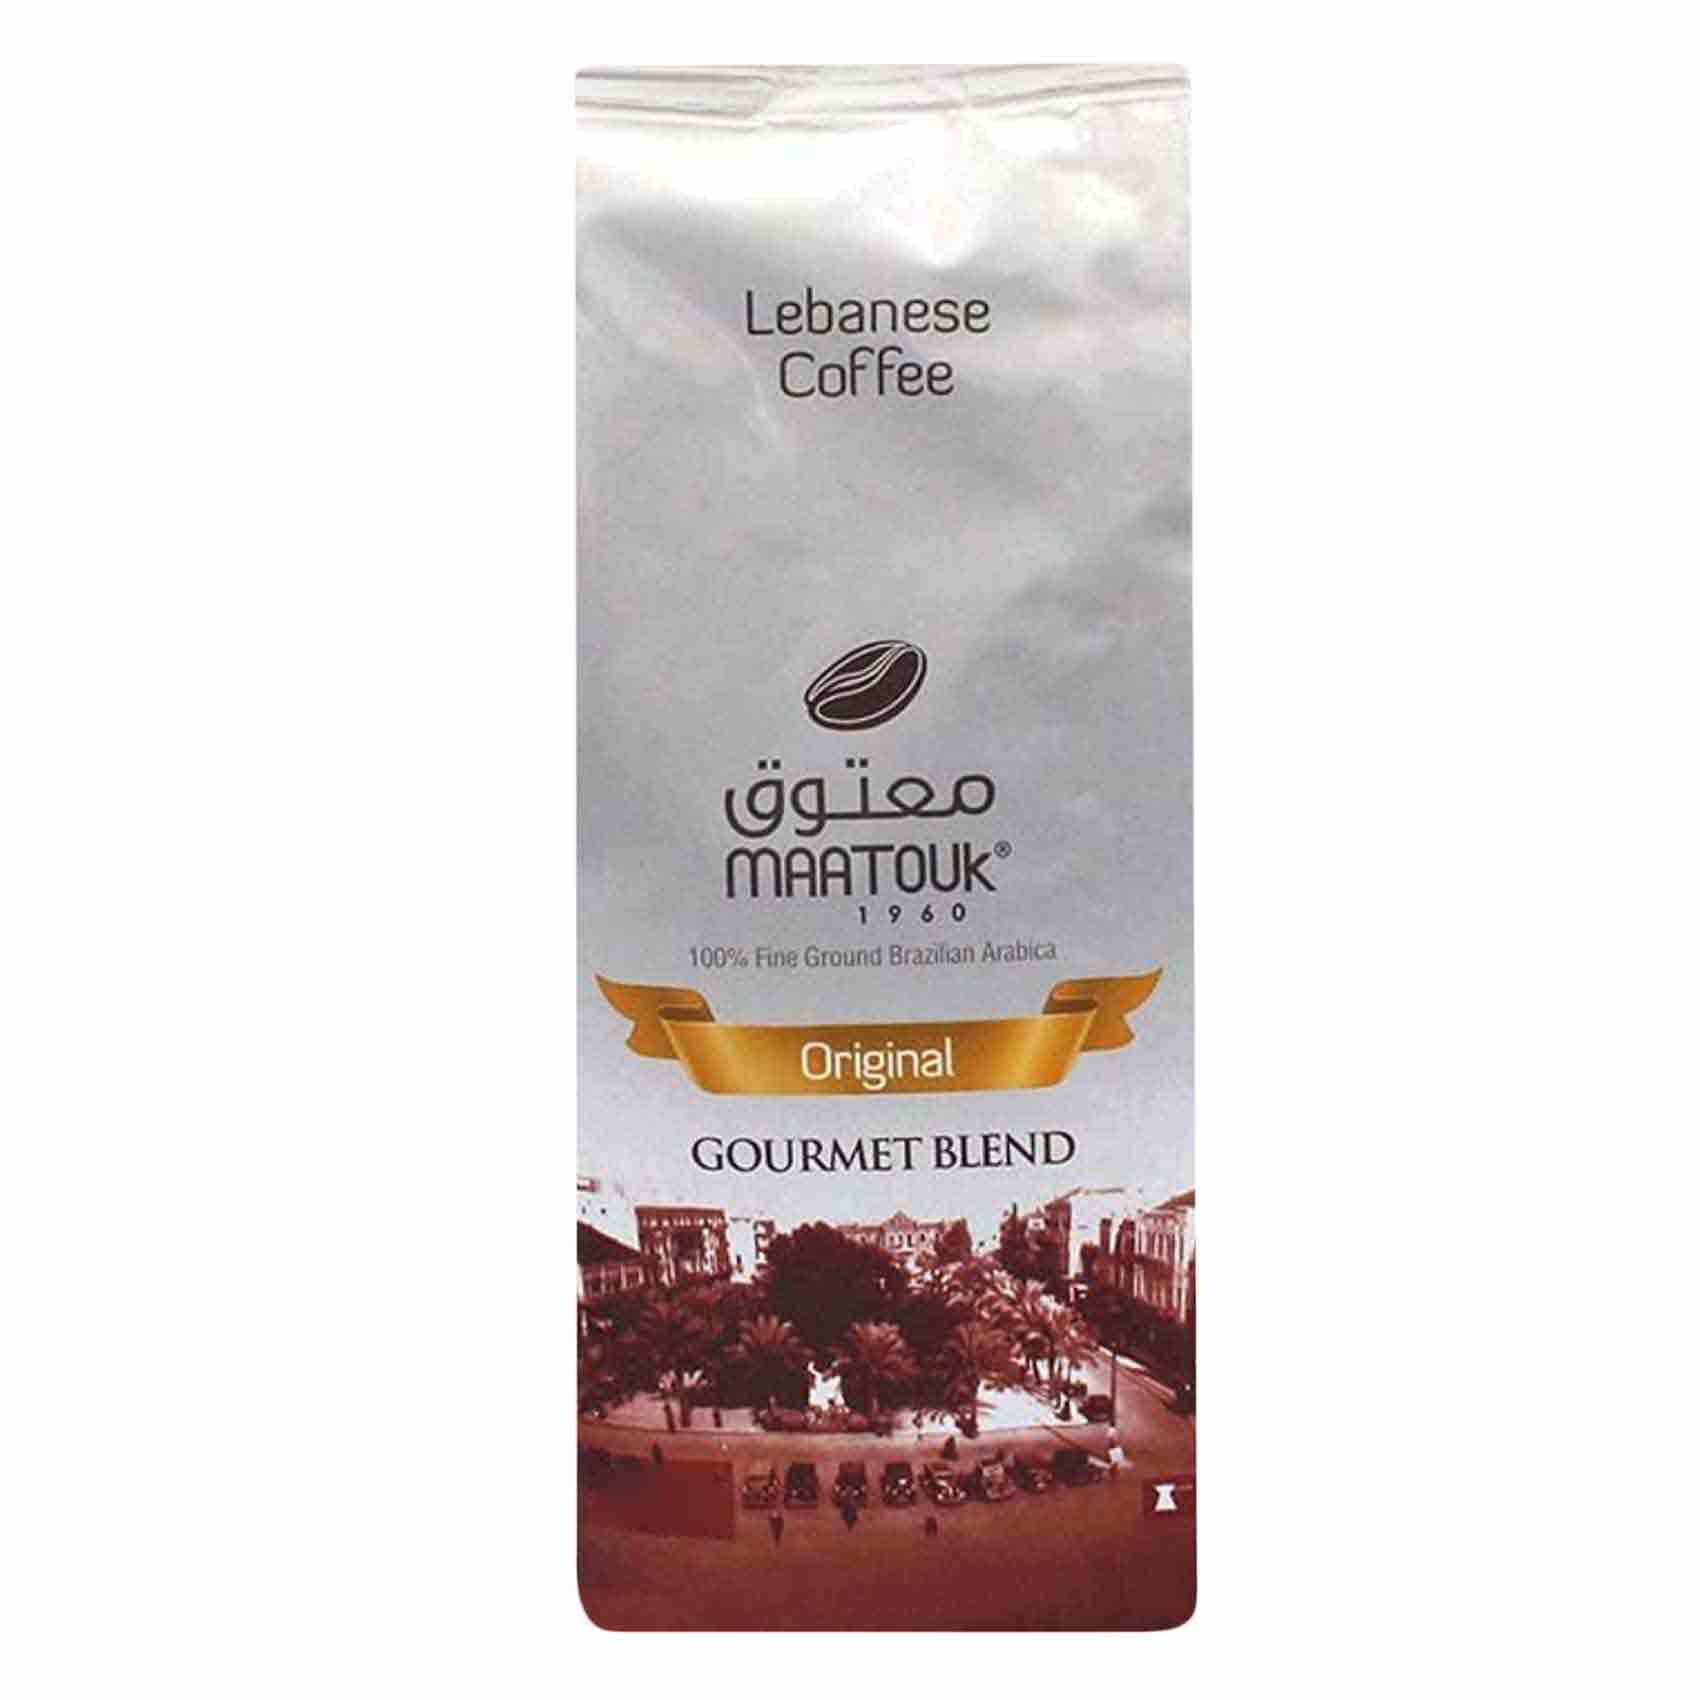 Maatouk Gourmet Blend Original Lebanese Coffee 400GR